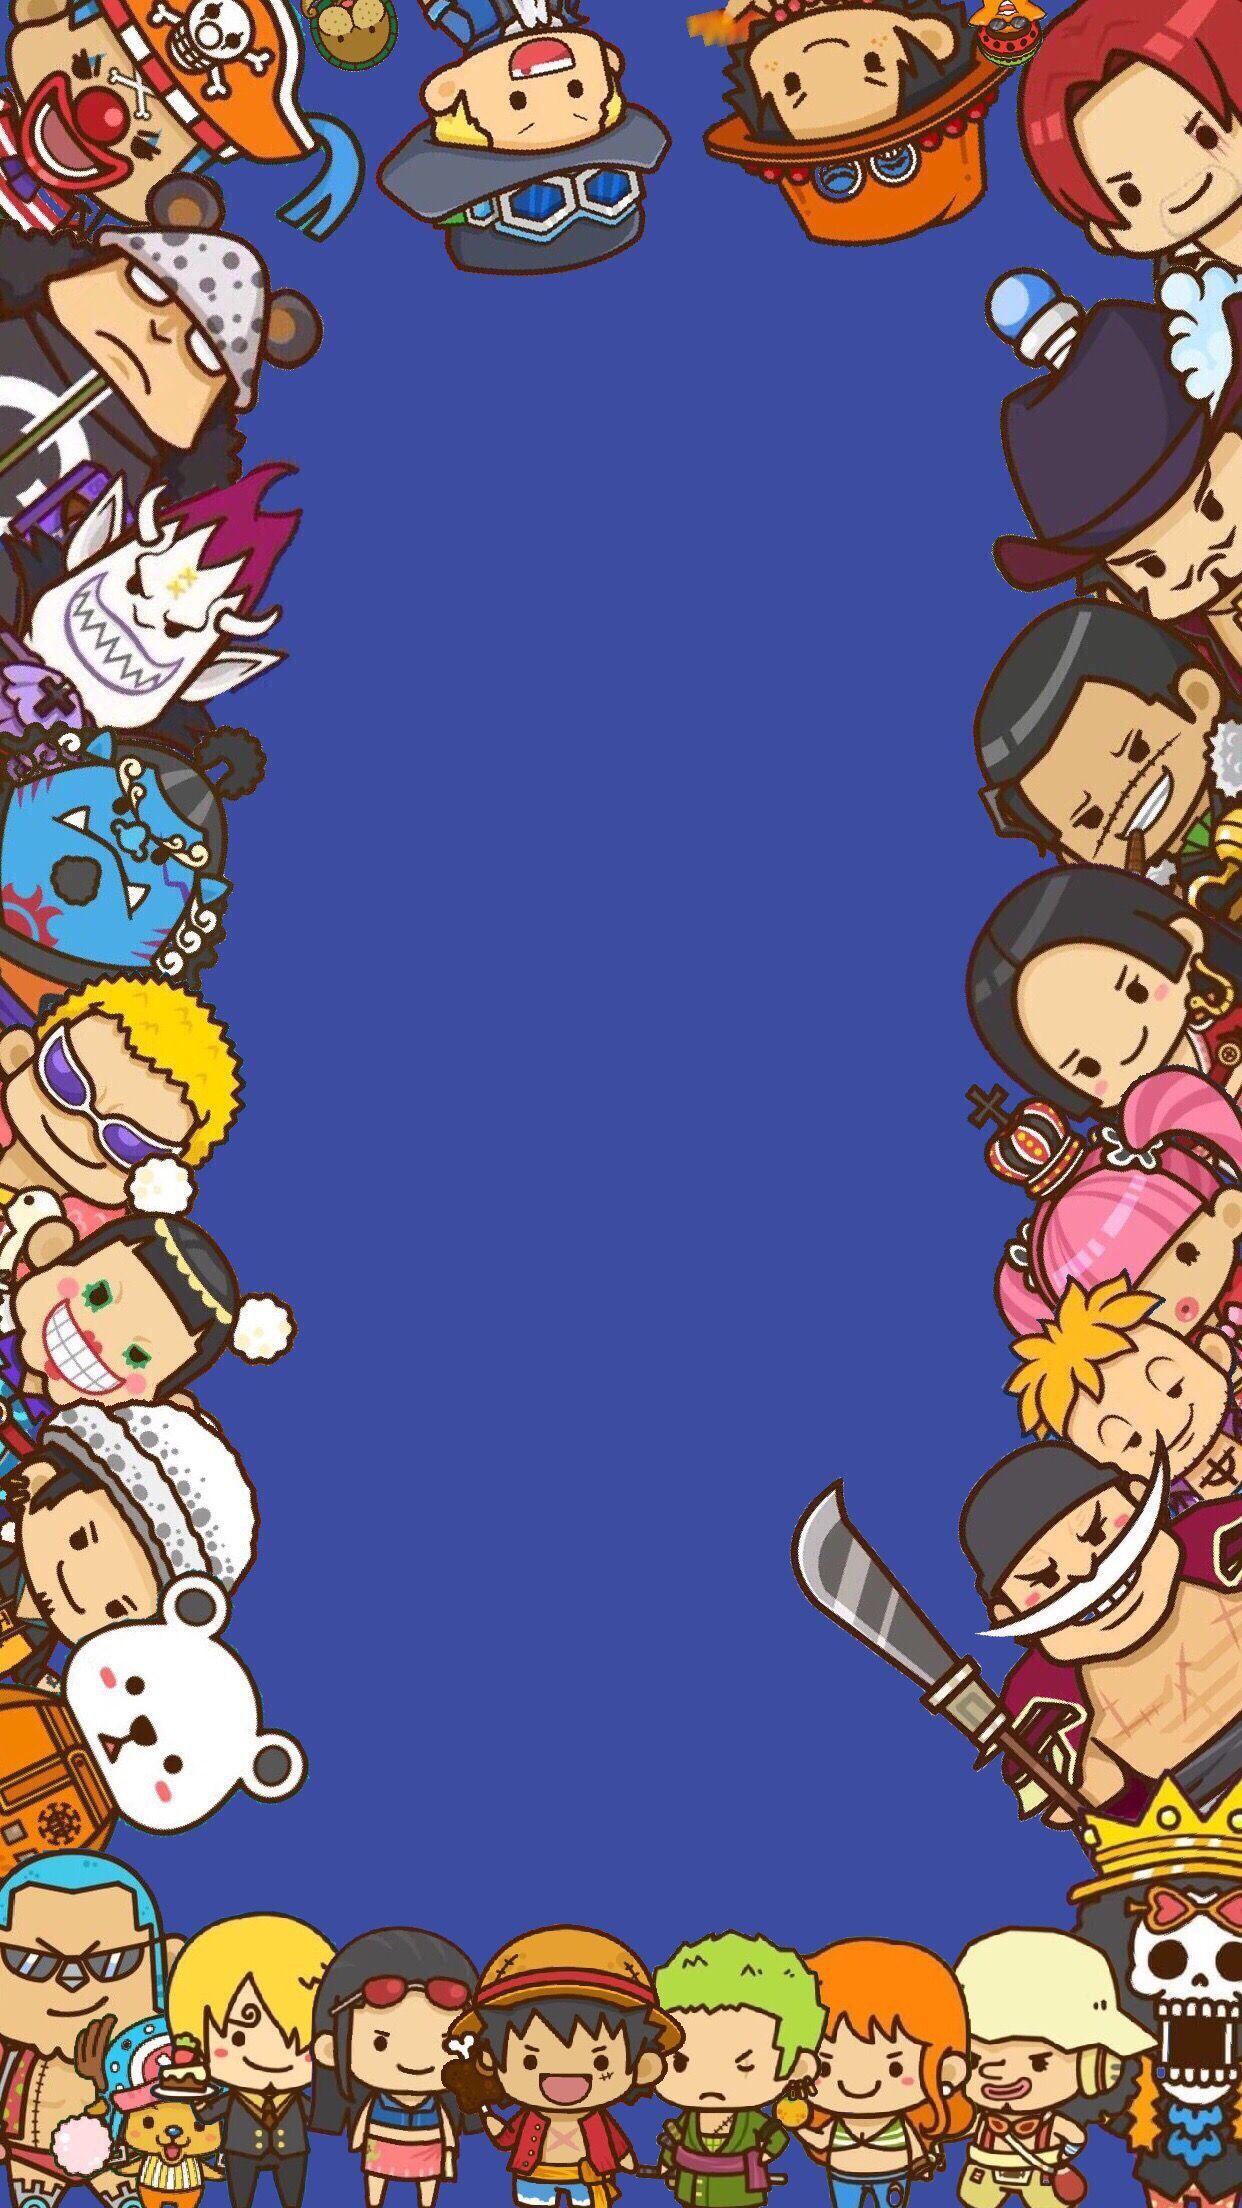 One Piece - Corazon mobile wallpaper - HD Mobile Walls